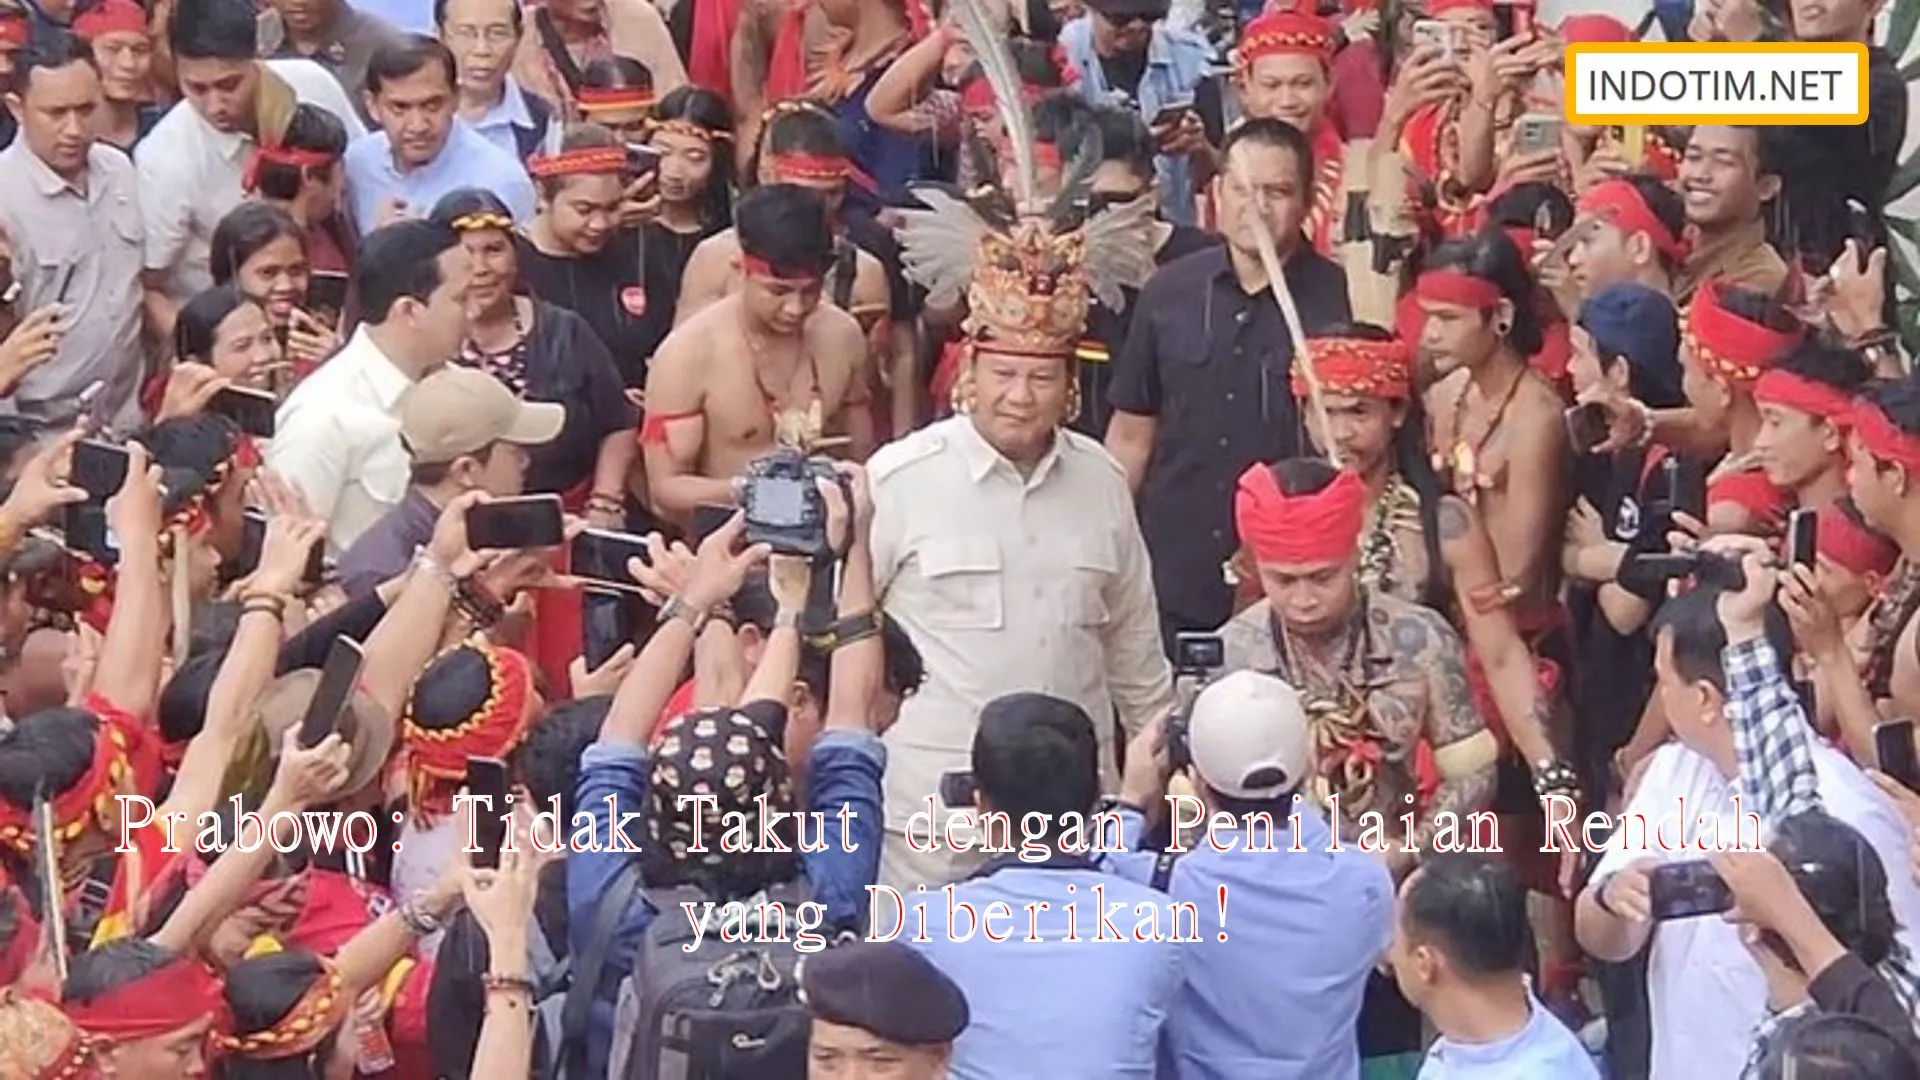 Prabowo: Tidak Takut dengan Penilaian Rendah yang Diberikan!